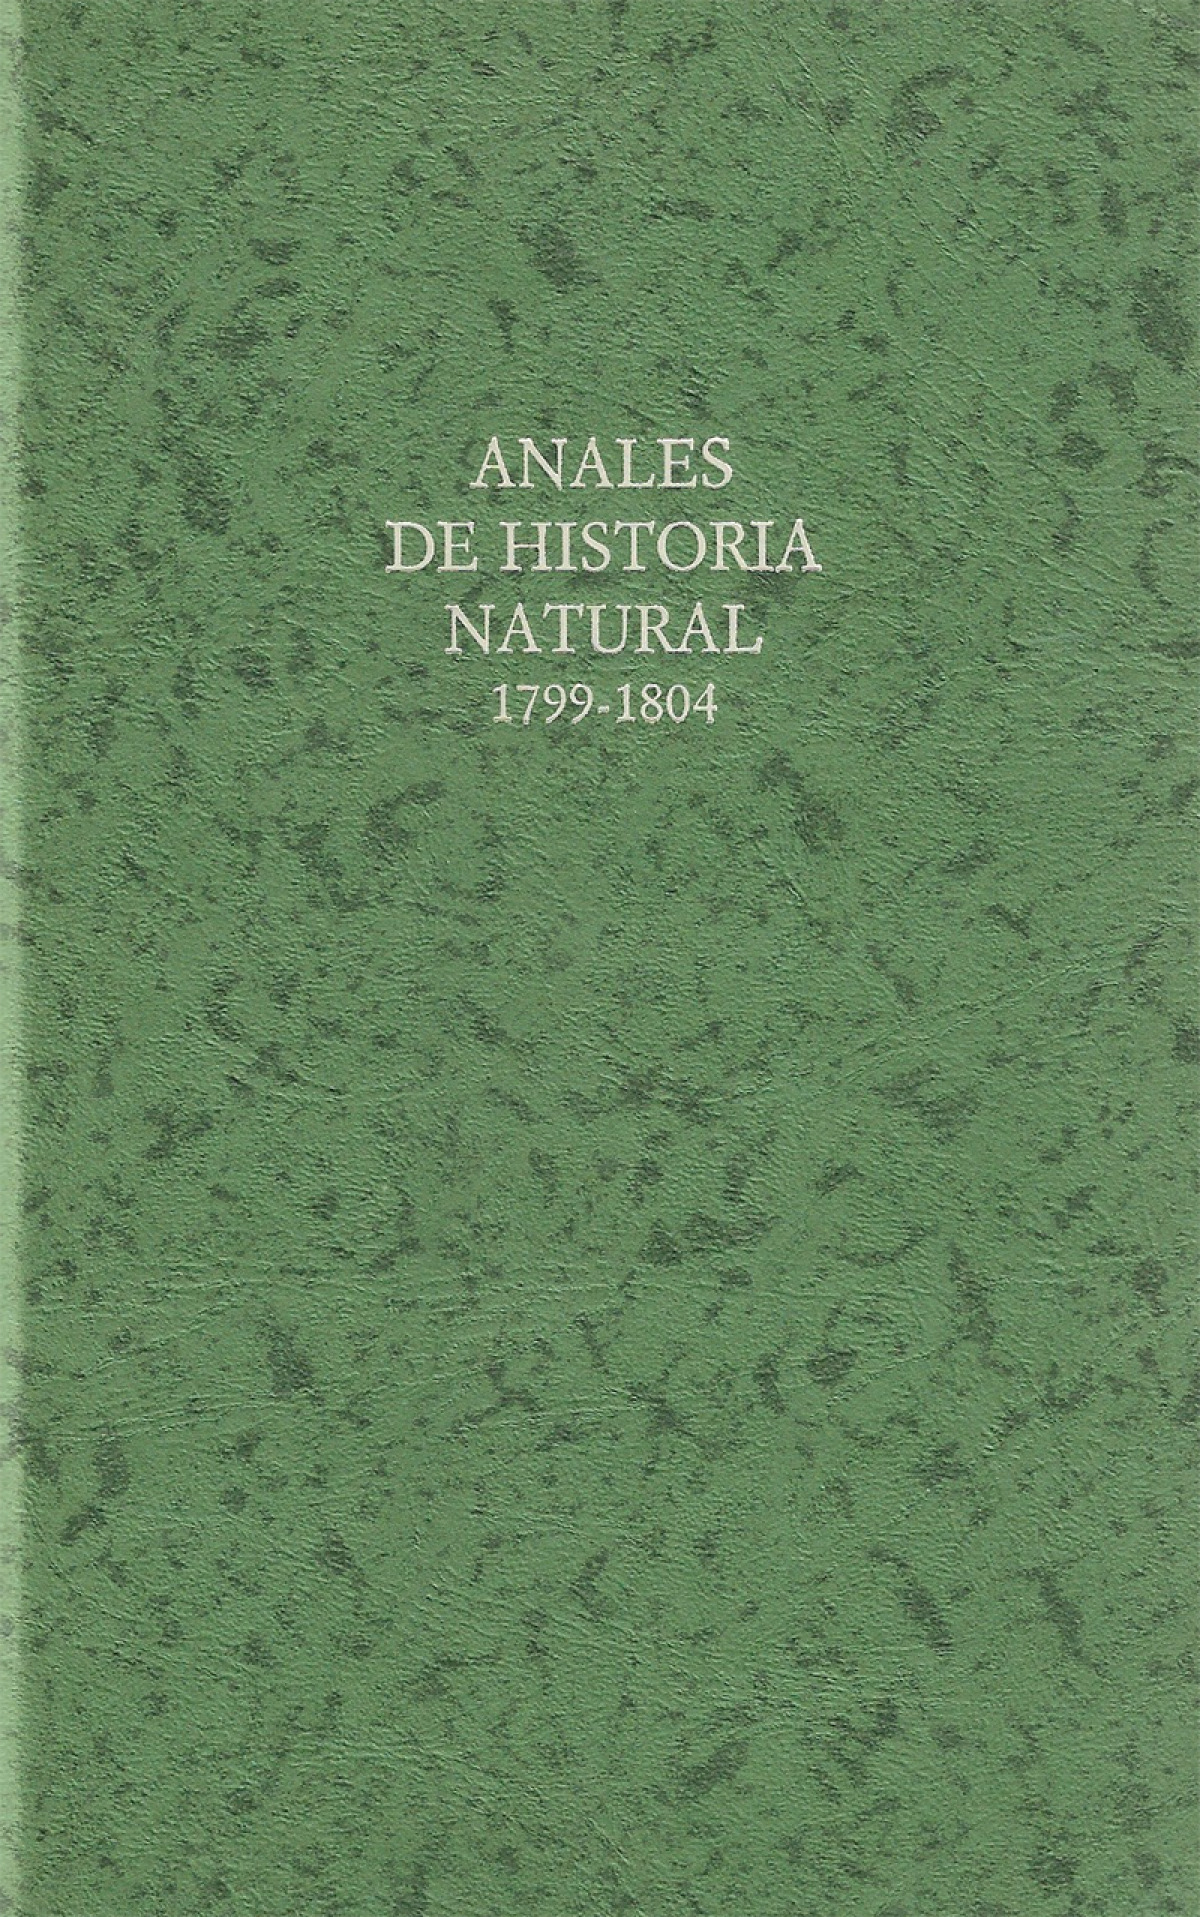 Anales de historia natural, 1799-1804 - Ín Editor: FernÁndez PÉrez, Joaqu